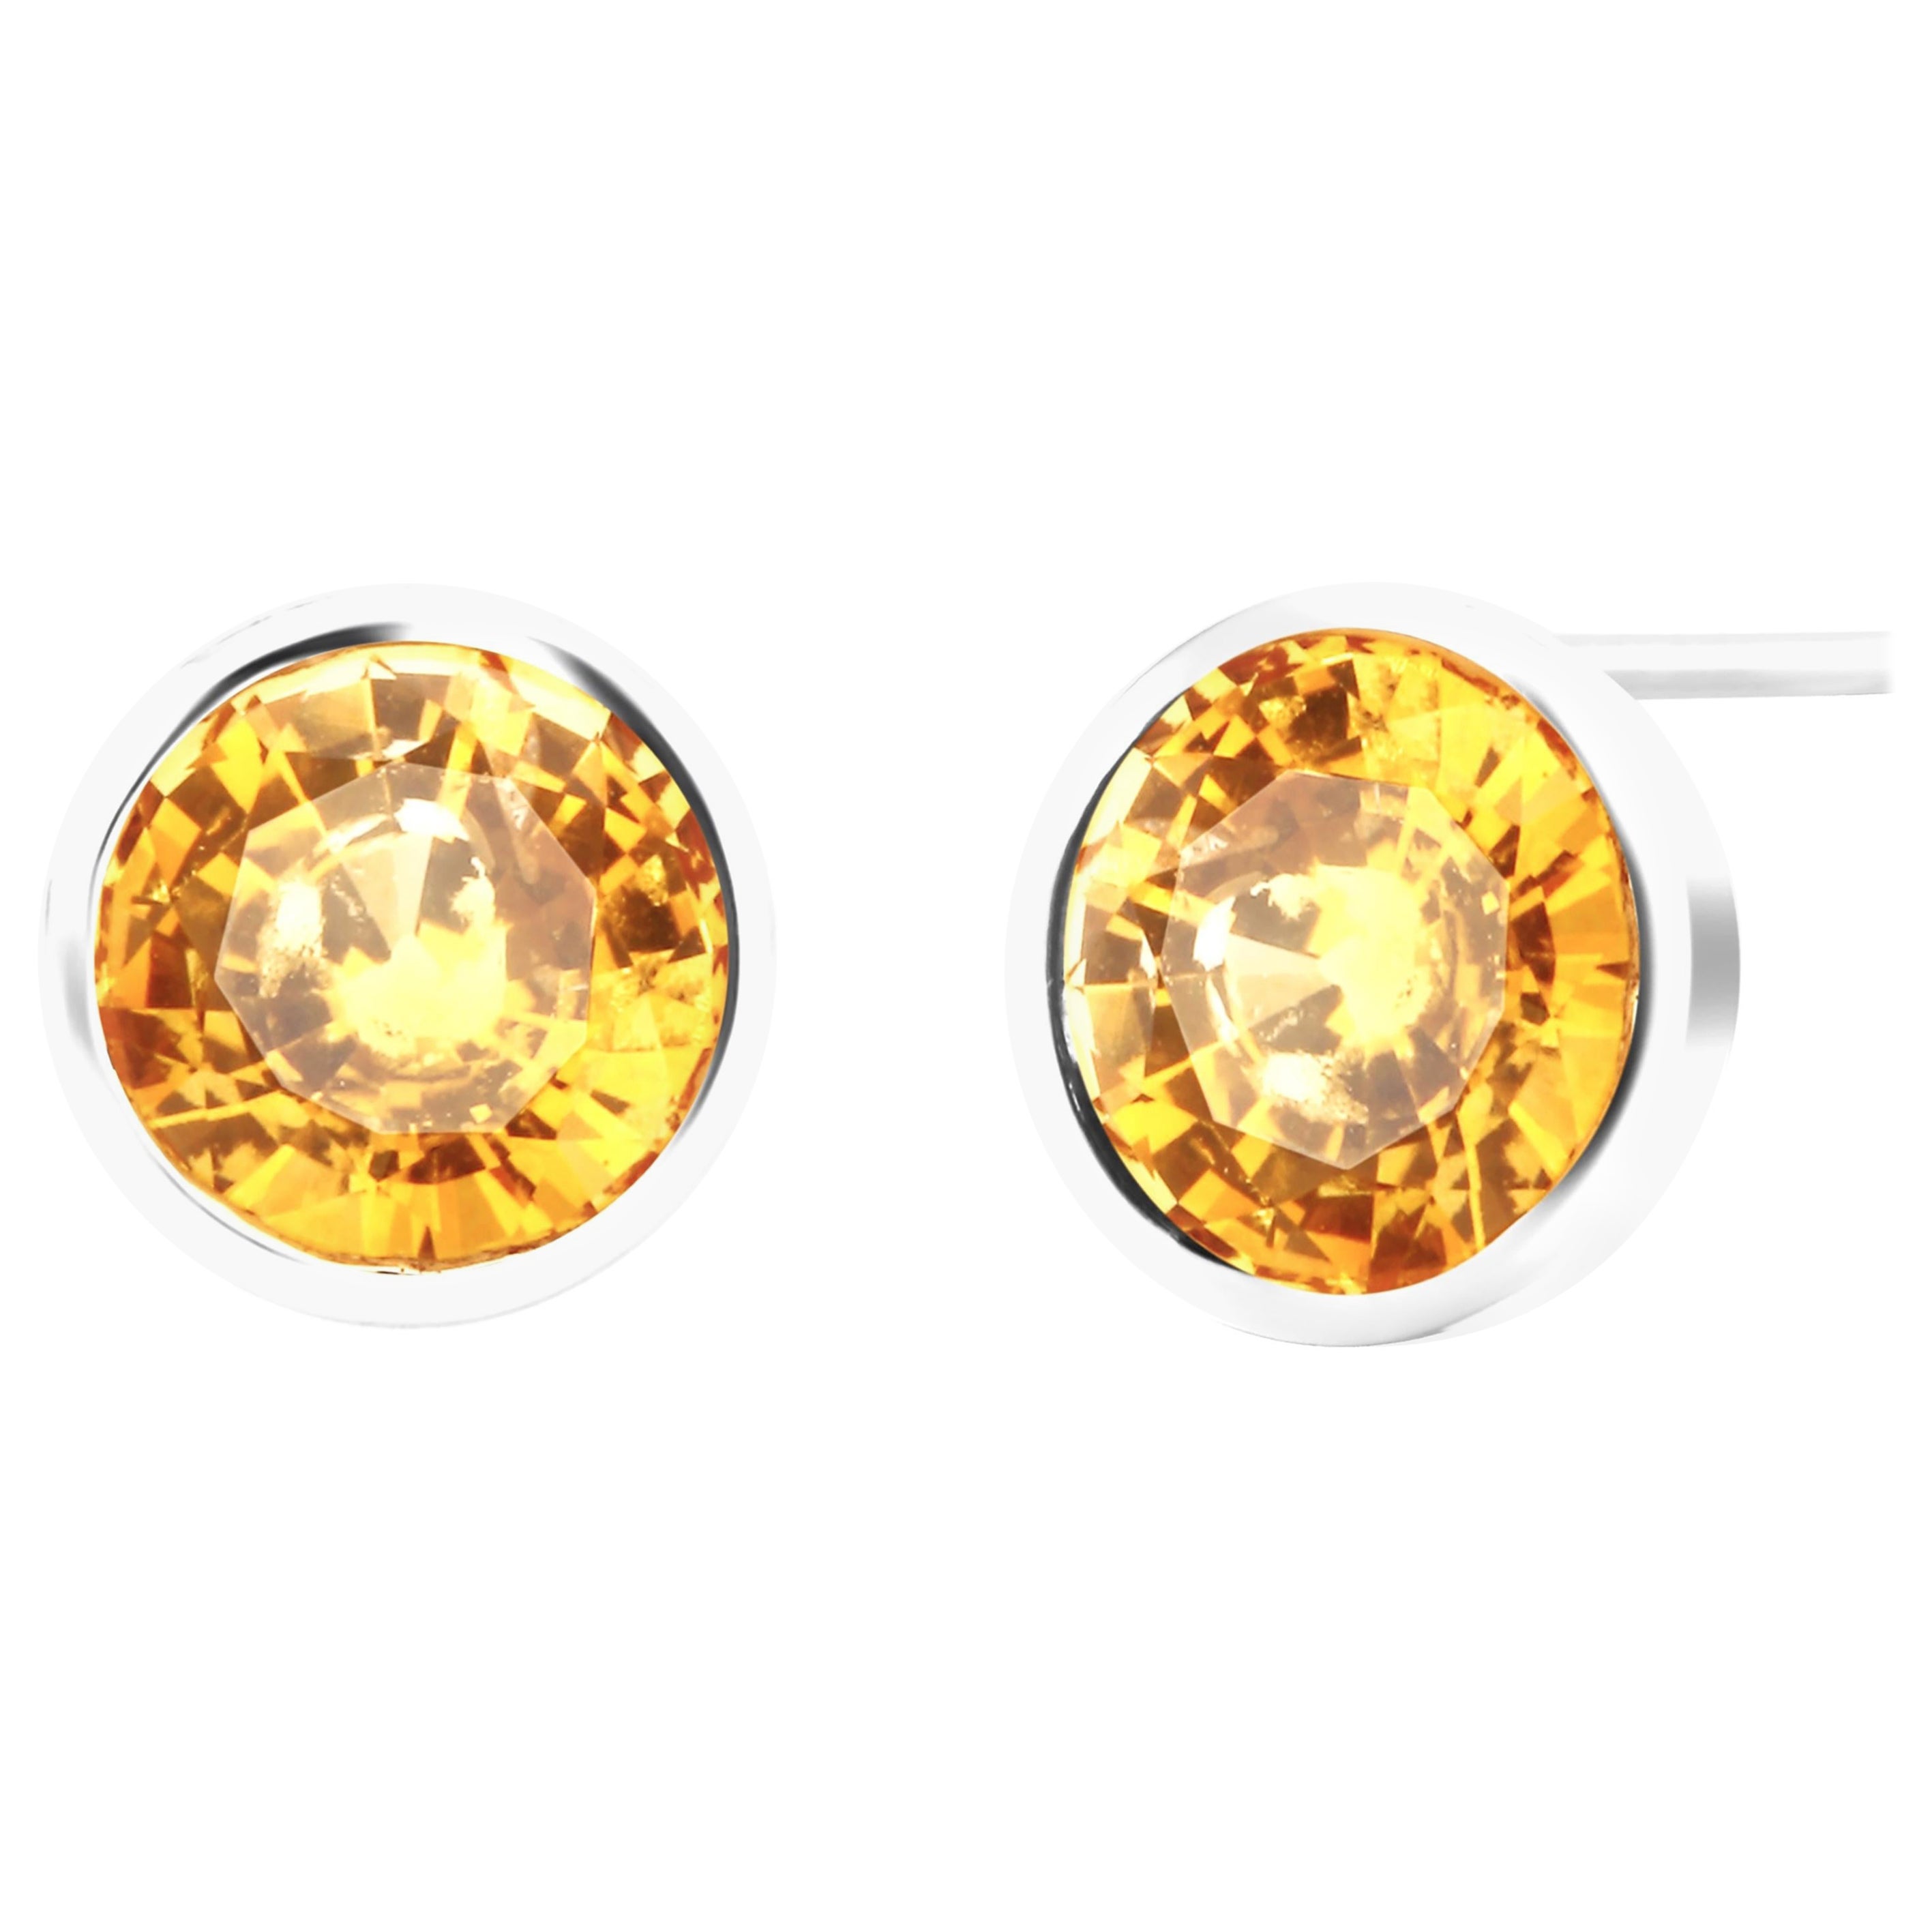 Ceylon Yellow Sapphire Bezel Set in White Gold Stud Earrings